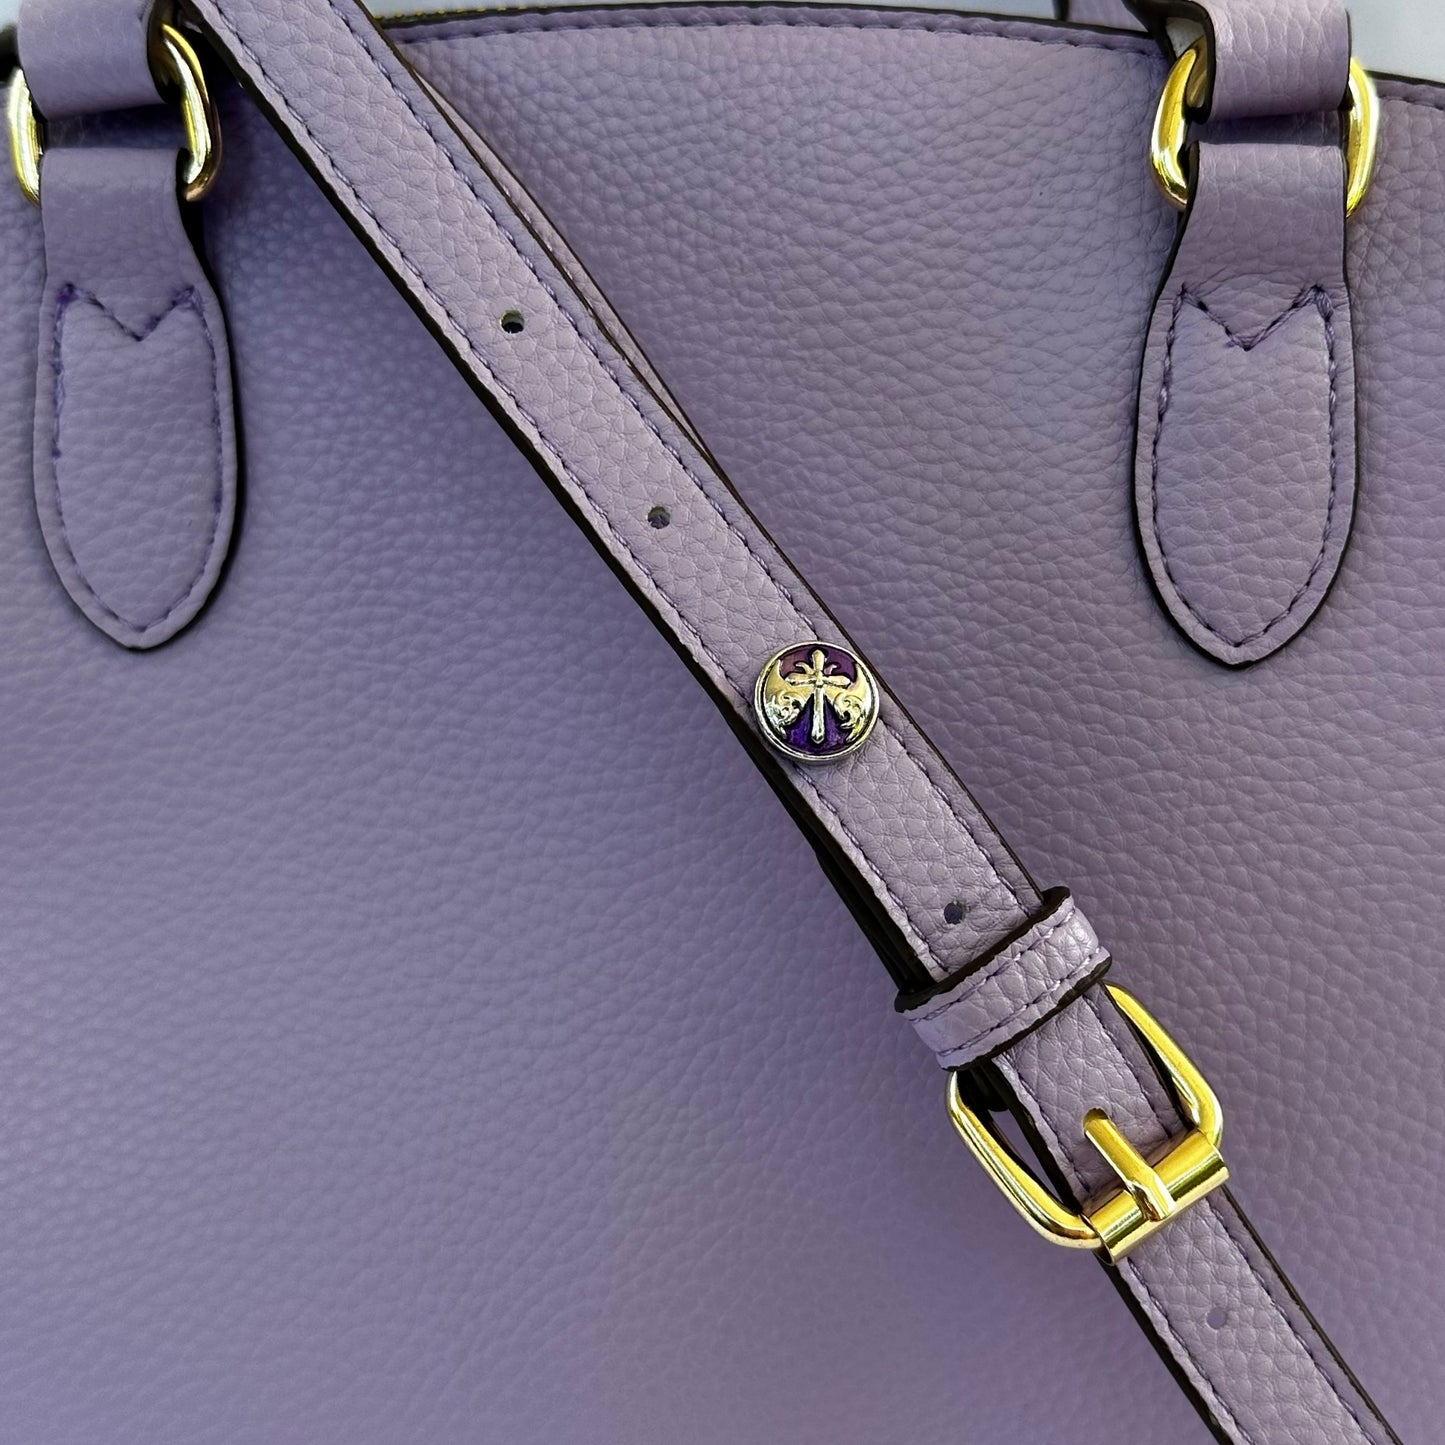 Purple Cross Belt, Bag and Watch Band Charm